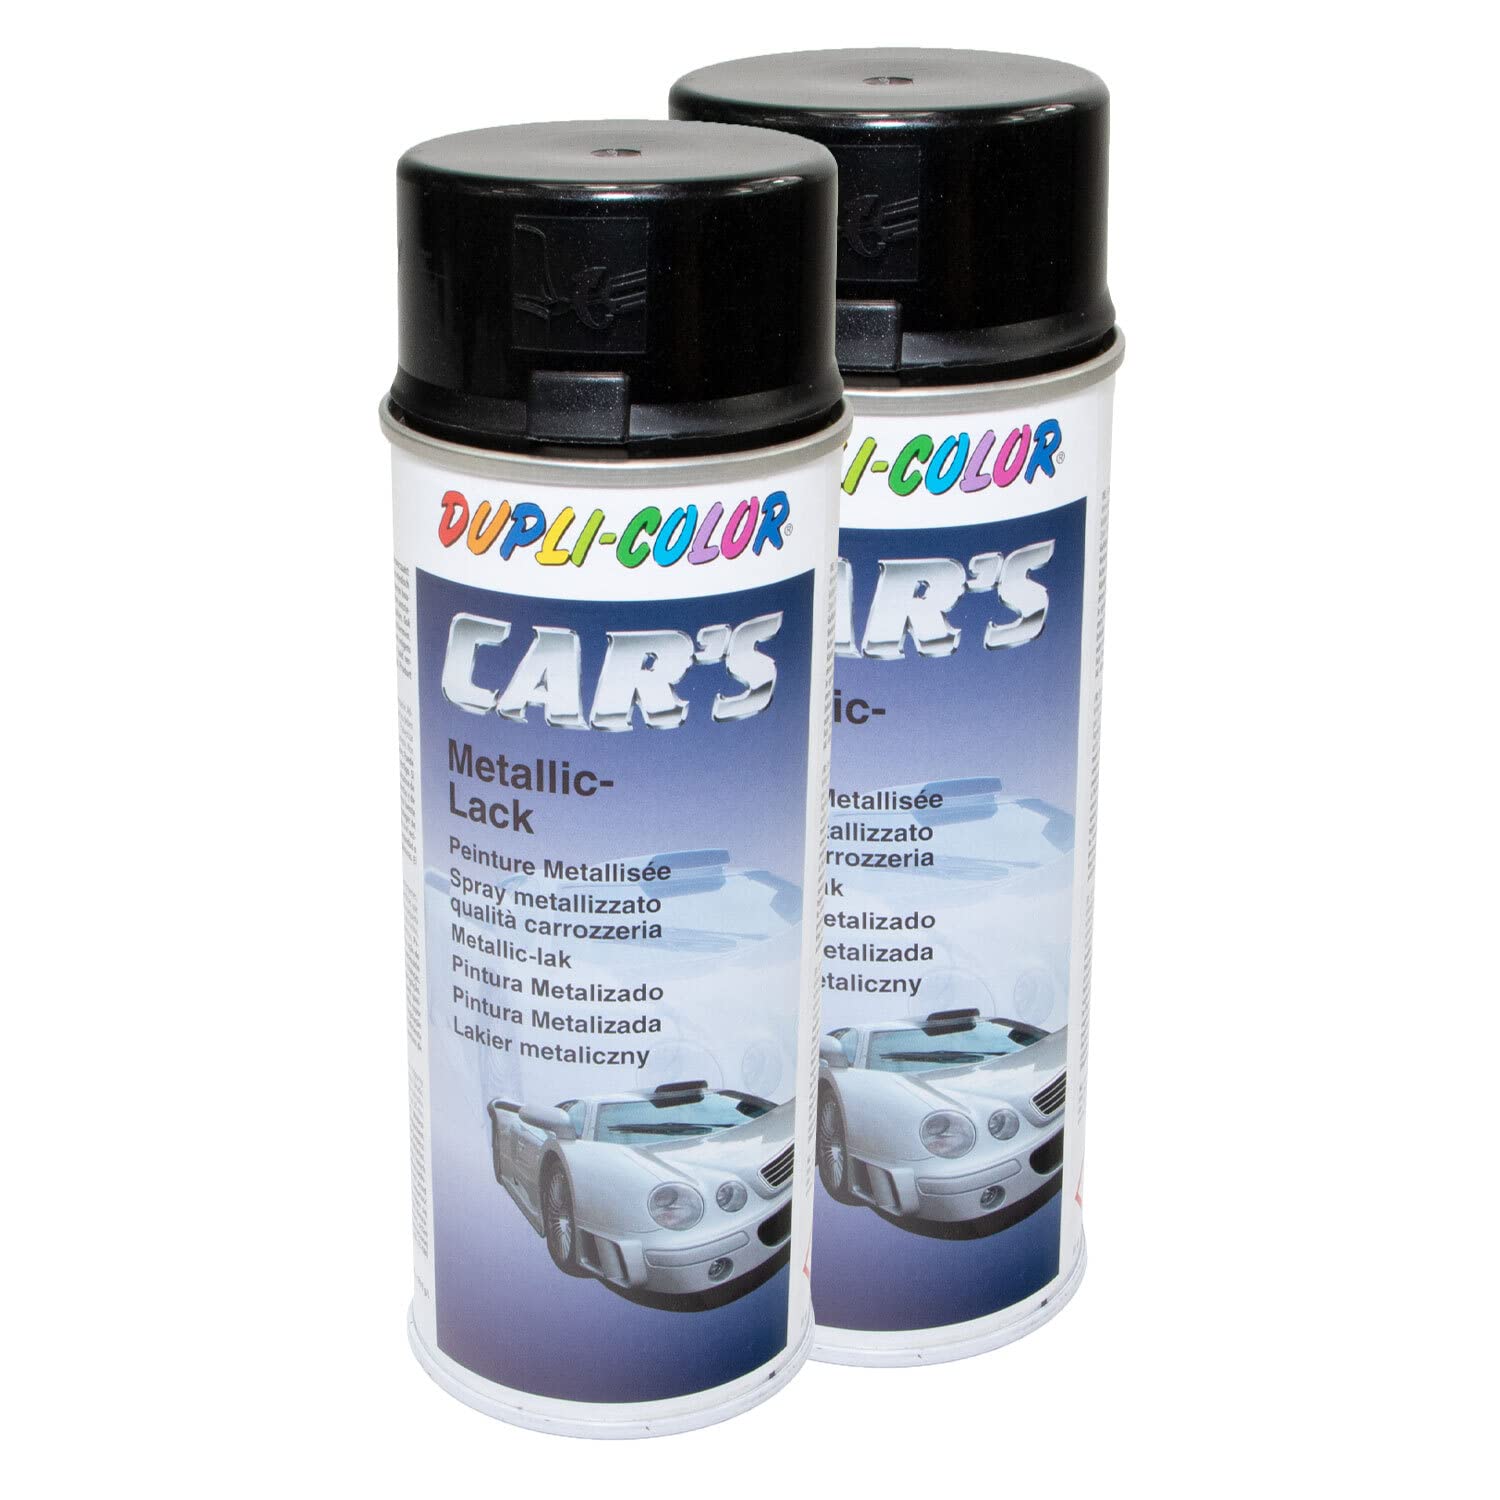 Lackspray Spraydose Sprühlack Cars Dupli Color 706875 schwarz metallic 2 X 400 ml von DUPLI_bundle